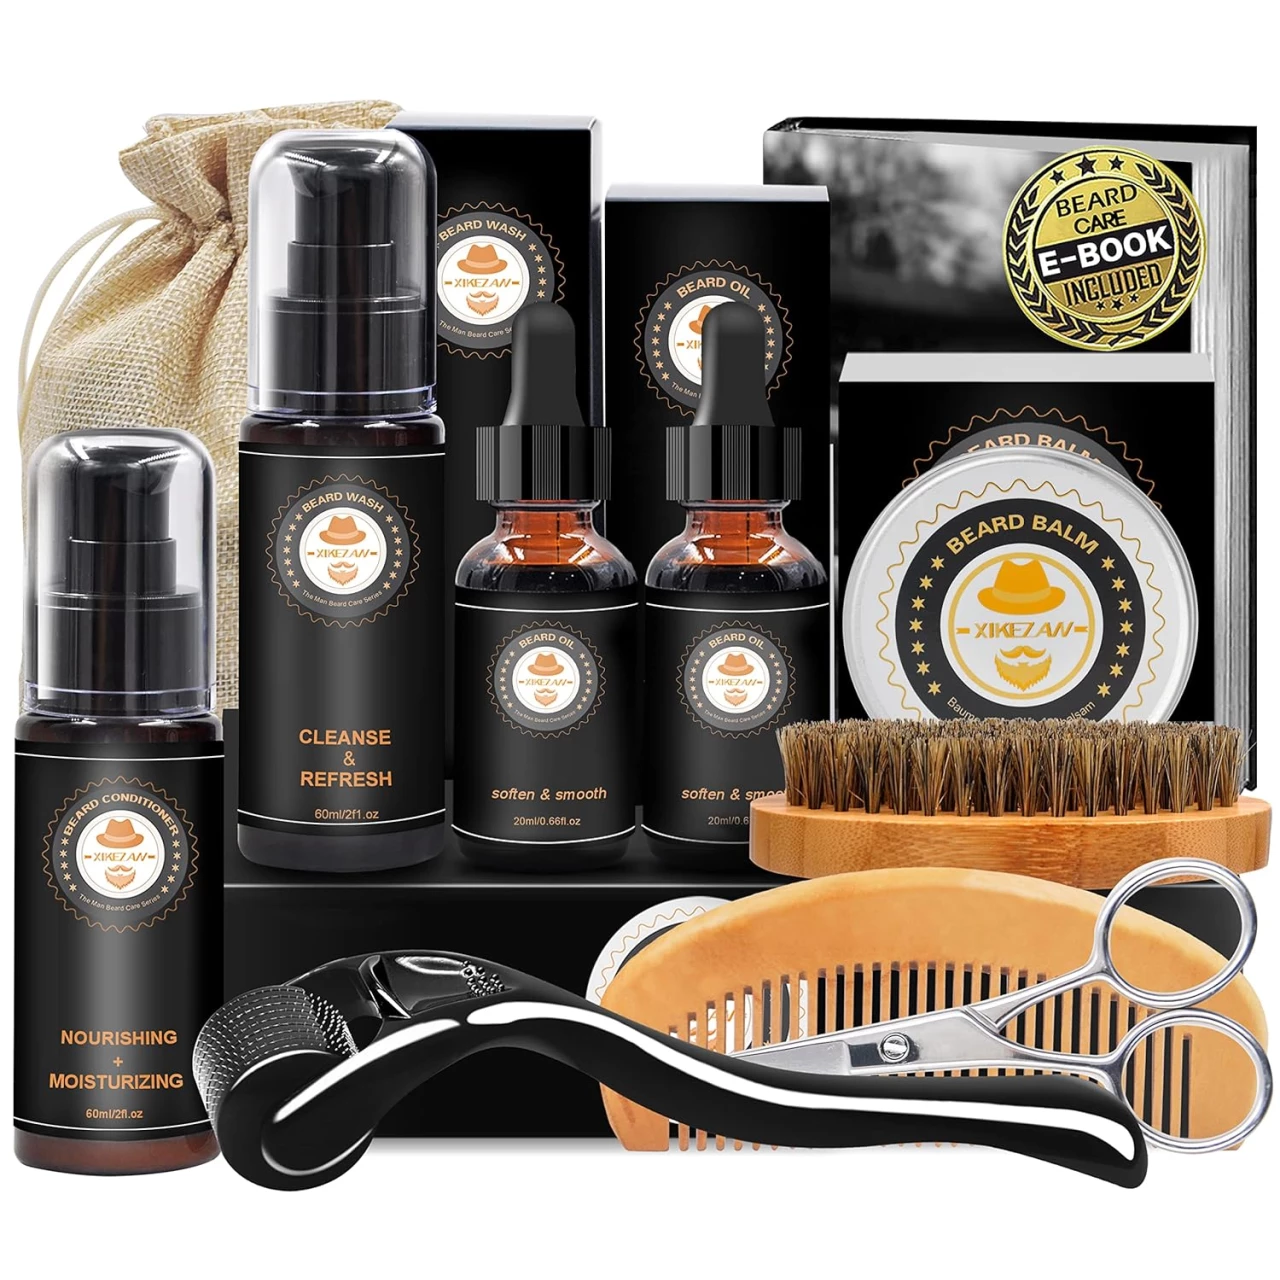 XIKEZAN Upgraded Beard Grooming Kit w/Beard Conditioner,Beard Oil,Beard Balm,Beard Brush,Beard Shampoo/Wash,Beard Comb,Beard Scissors,Storage Bag,Beard E-Book,Beard Growth Care Gifts for Men